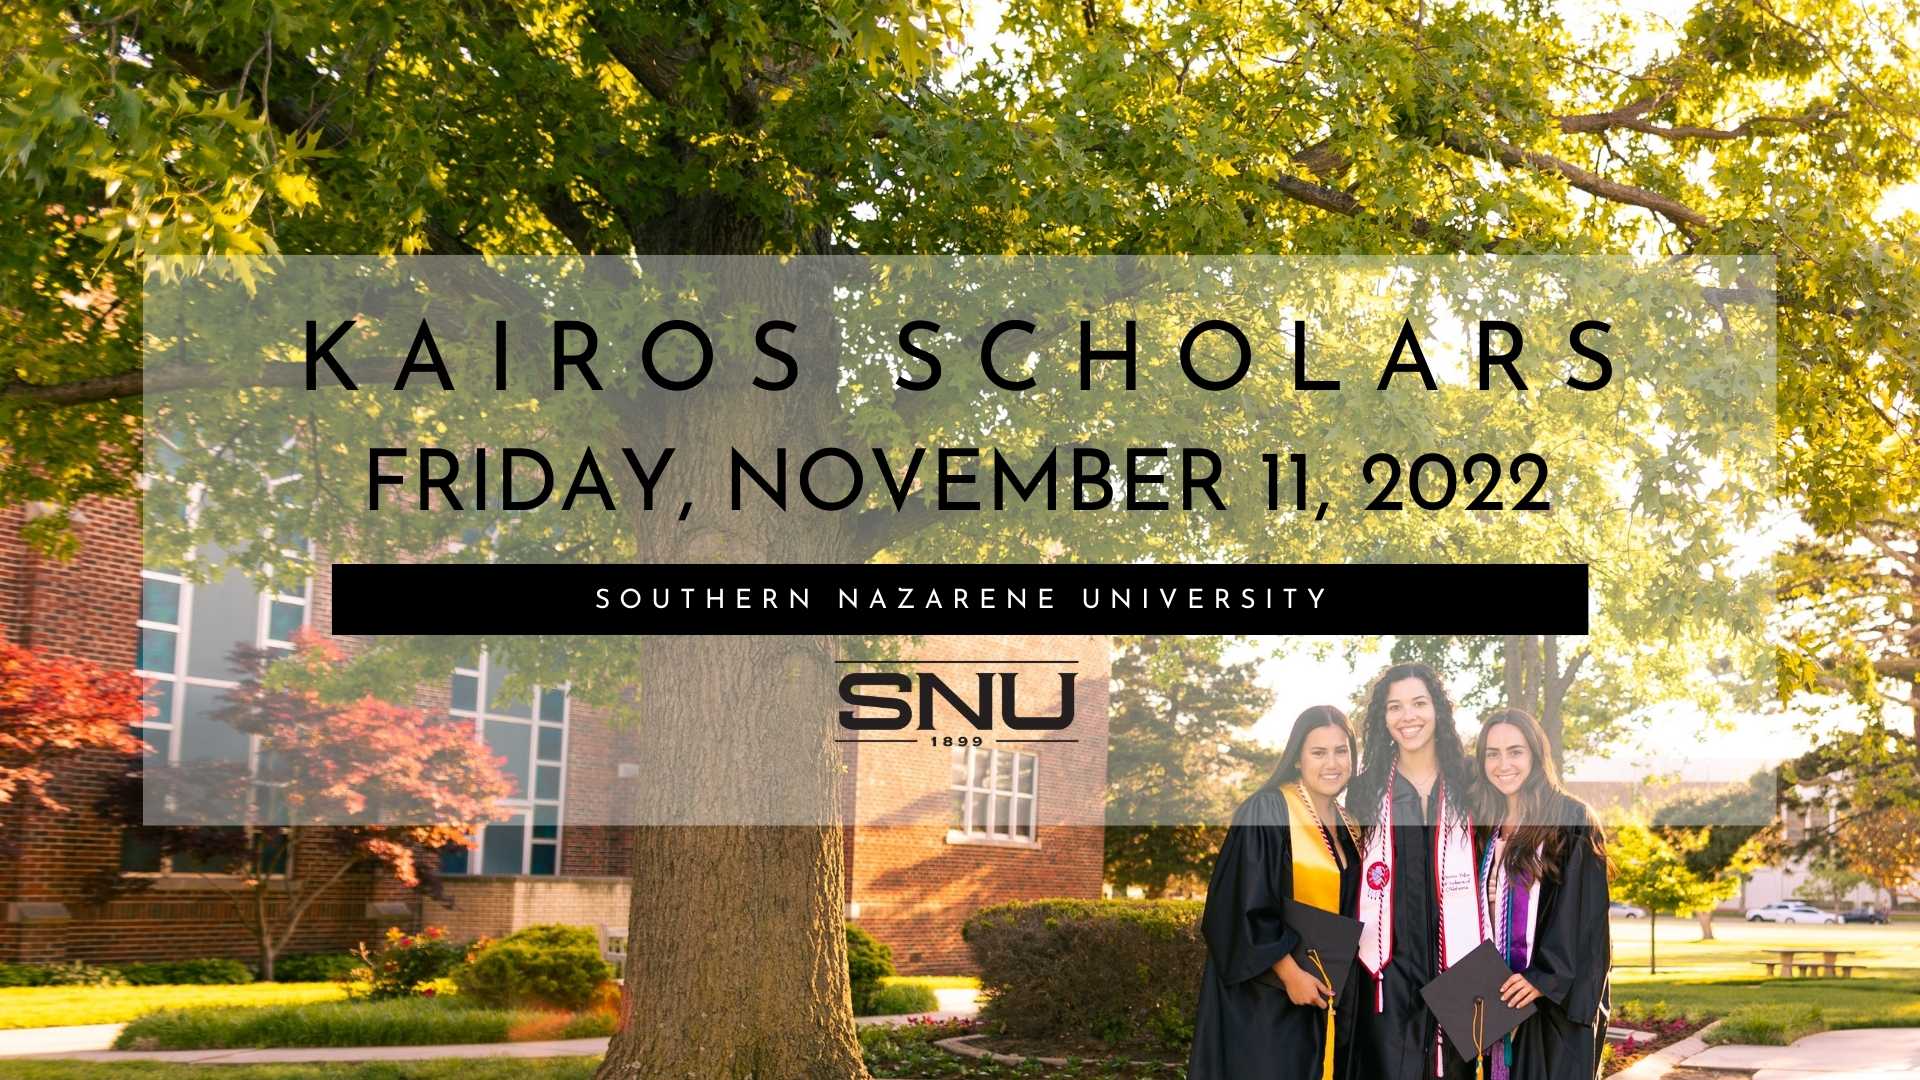 Kairos Scholars Friday november 11th 2022